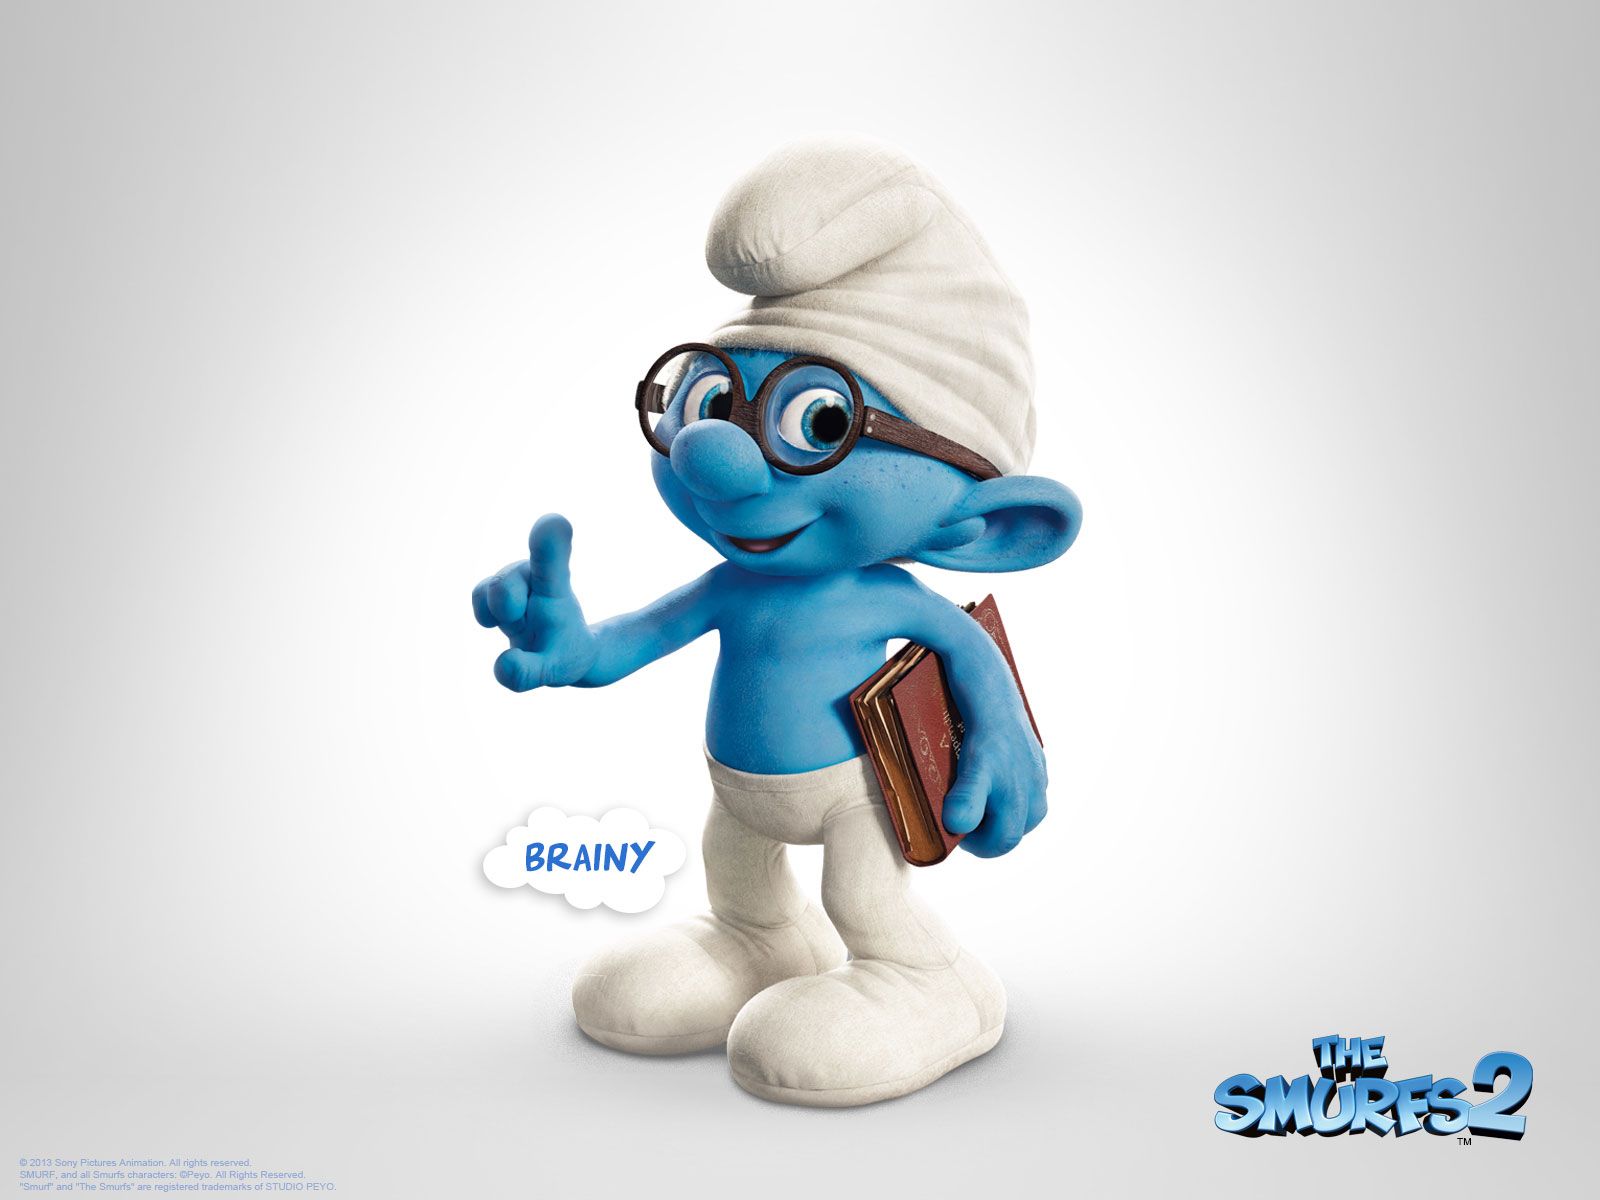 The Smurfs 2 (2013) Wallpaper, Facebook Cover Photo & Characters Icon. Smurfs, Smurfs movie, The smurfs 2